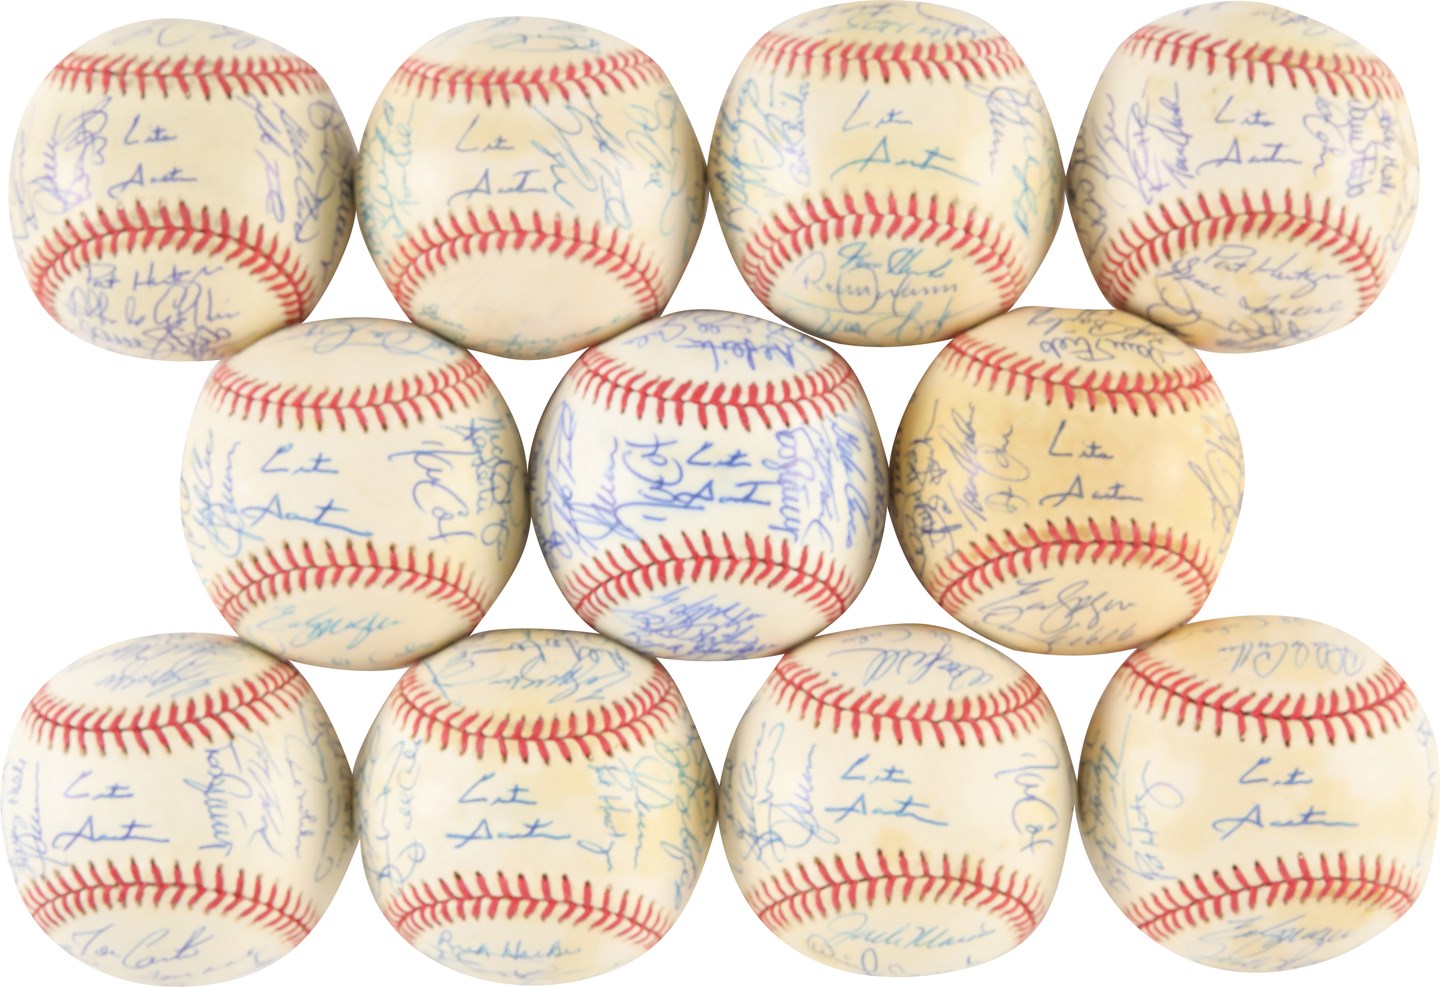 - 1992 & 1993 World Champion Blue Jays Team Signed Baseball Collection (19)